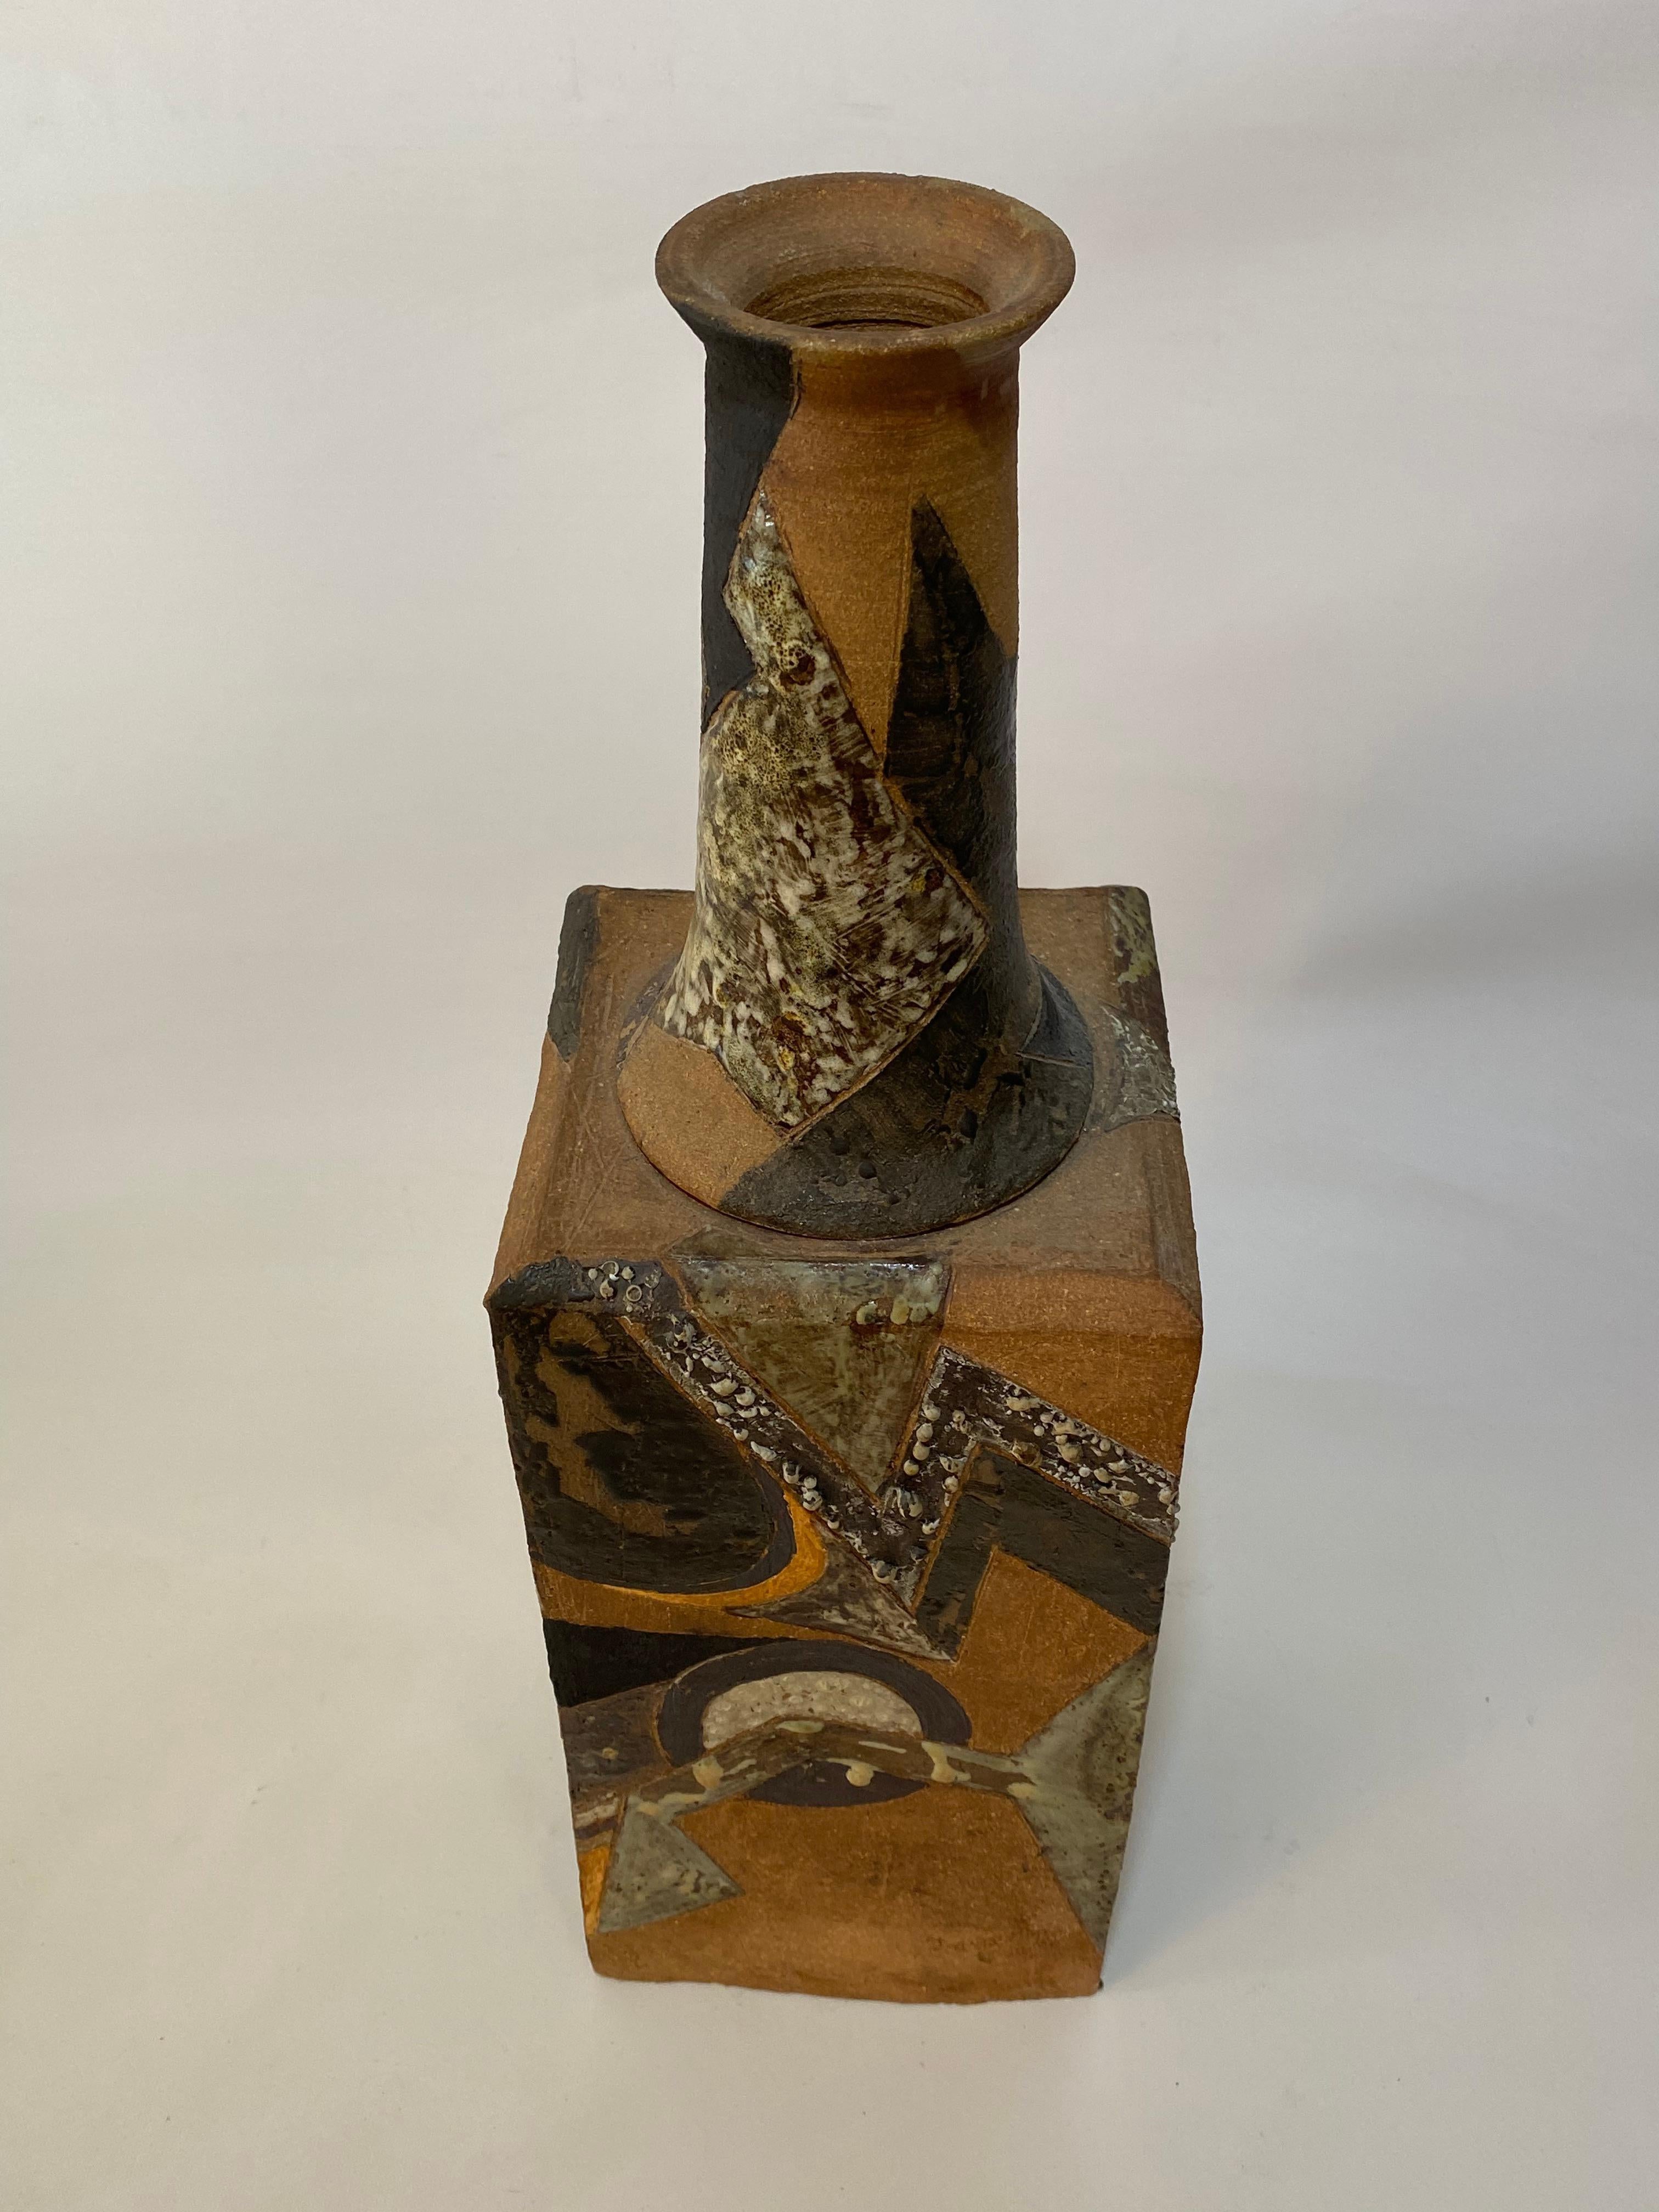 1970 Brutalist Studio Pottery Floor Vase by Inge In Good Condition For Sale In Garnerville, NY